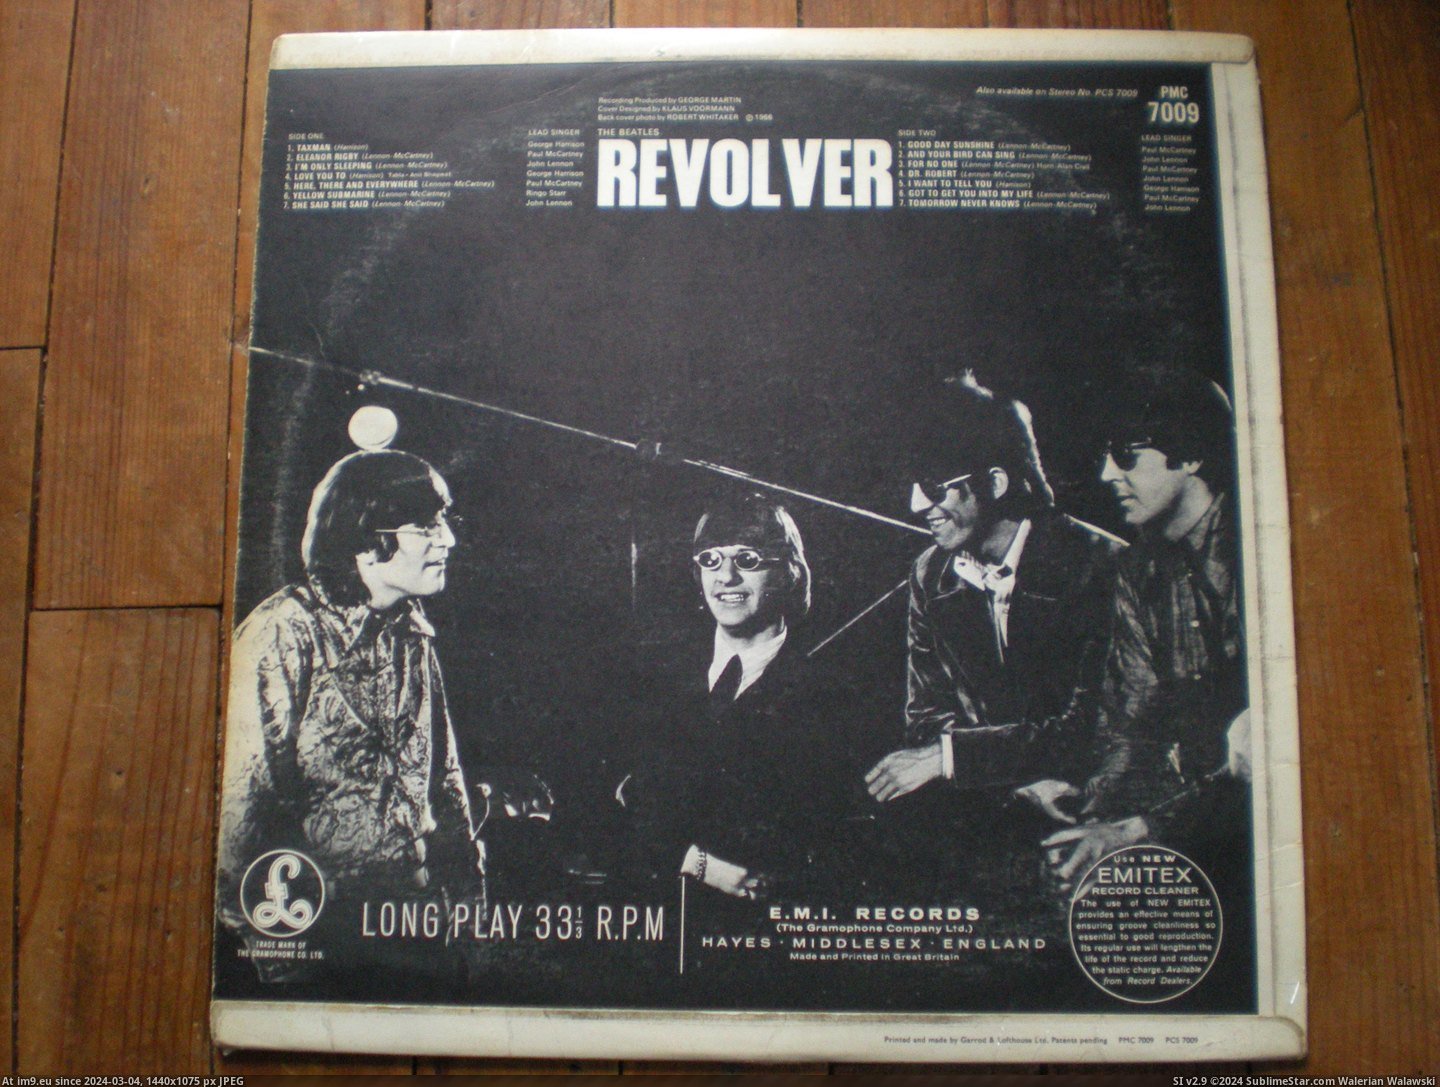  #Revolver  Revolver 17-01-14 6 Pic. (Изображение из альбом new 1))